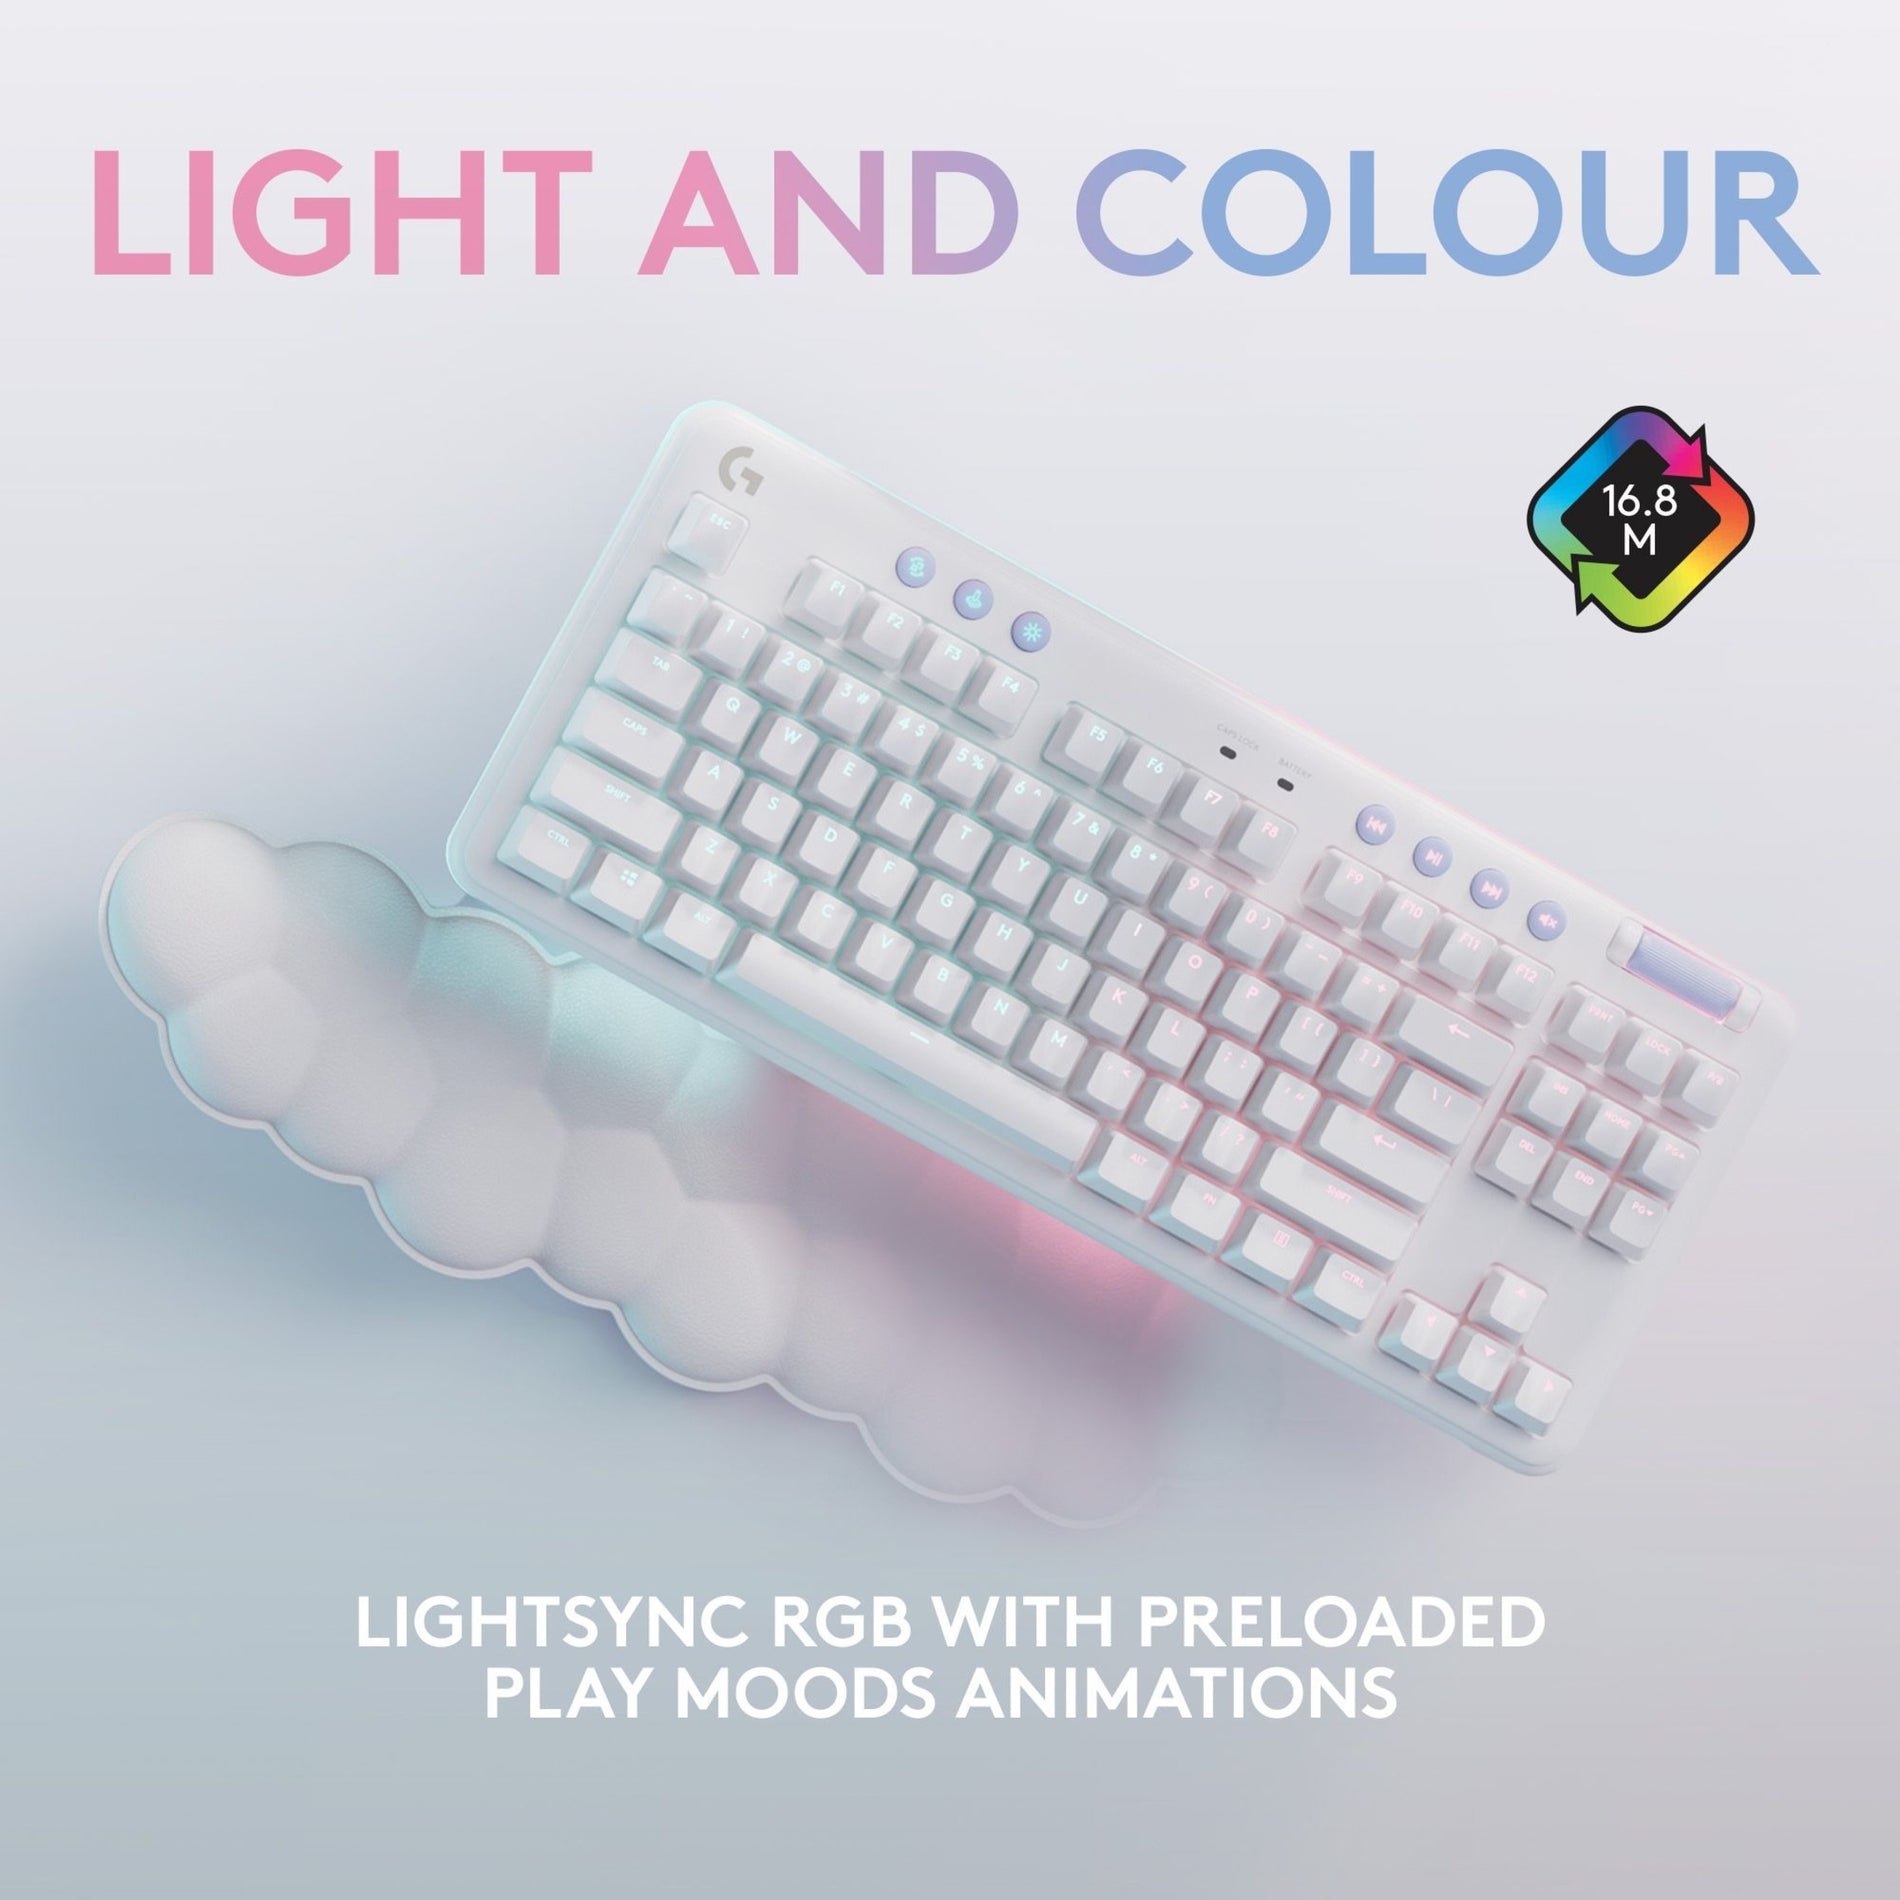 Logitech 920-010656 G715 Gaming Keyboard, RGB LED Backlight, Wireless Bluetooth Connectivity